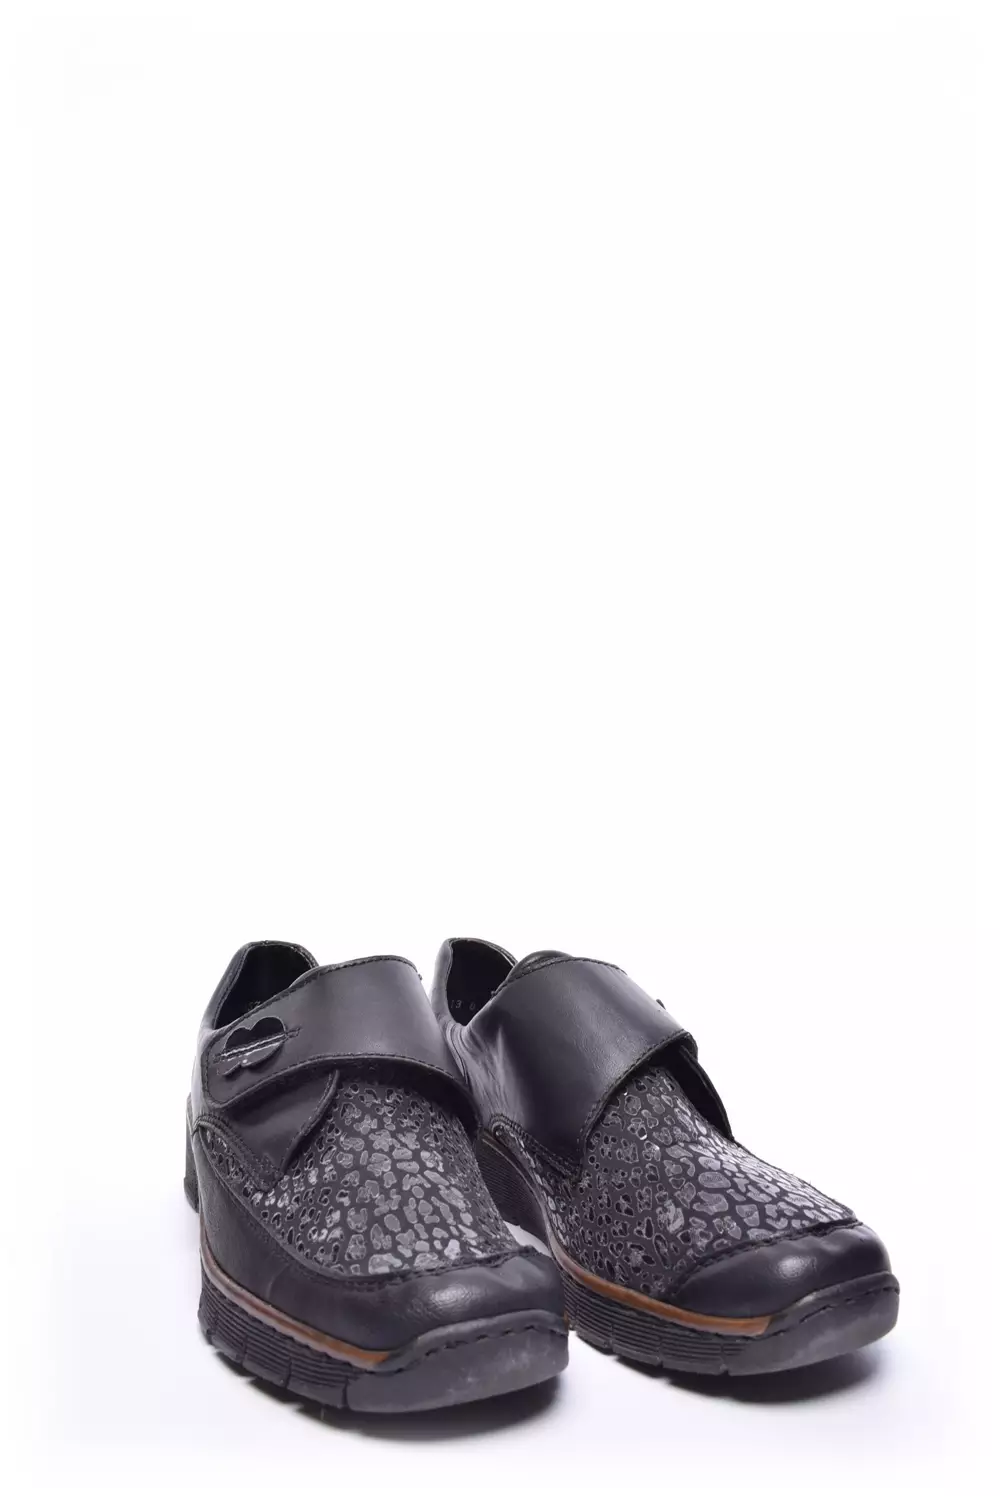 Pantofi dama elastici [3]